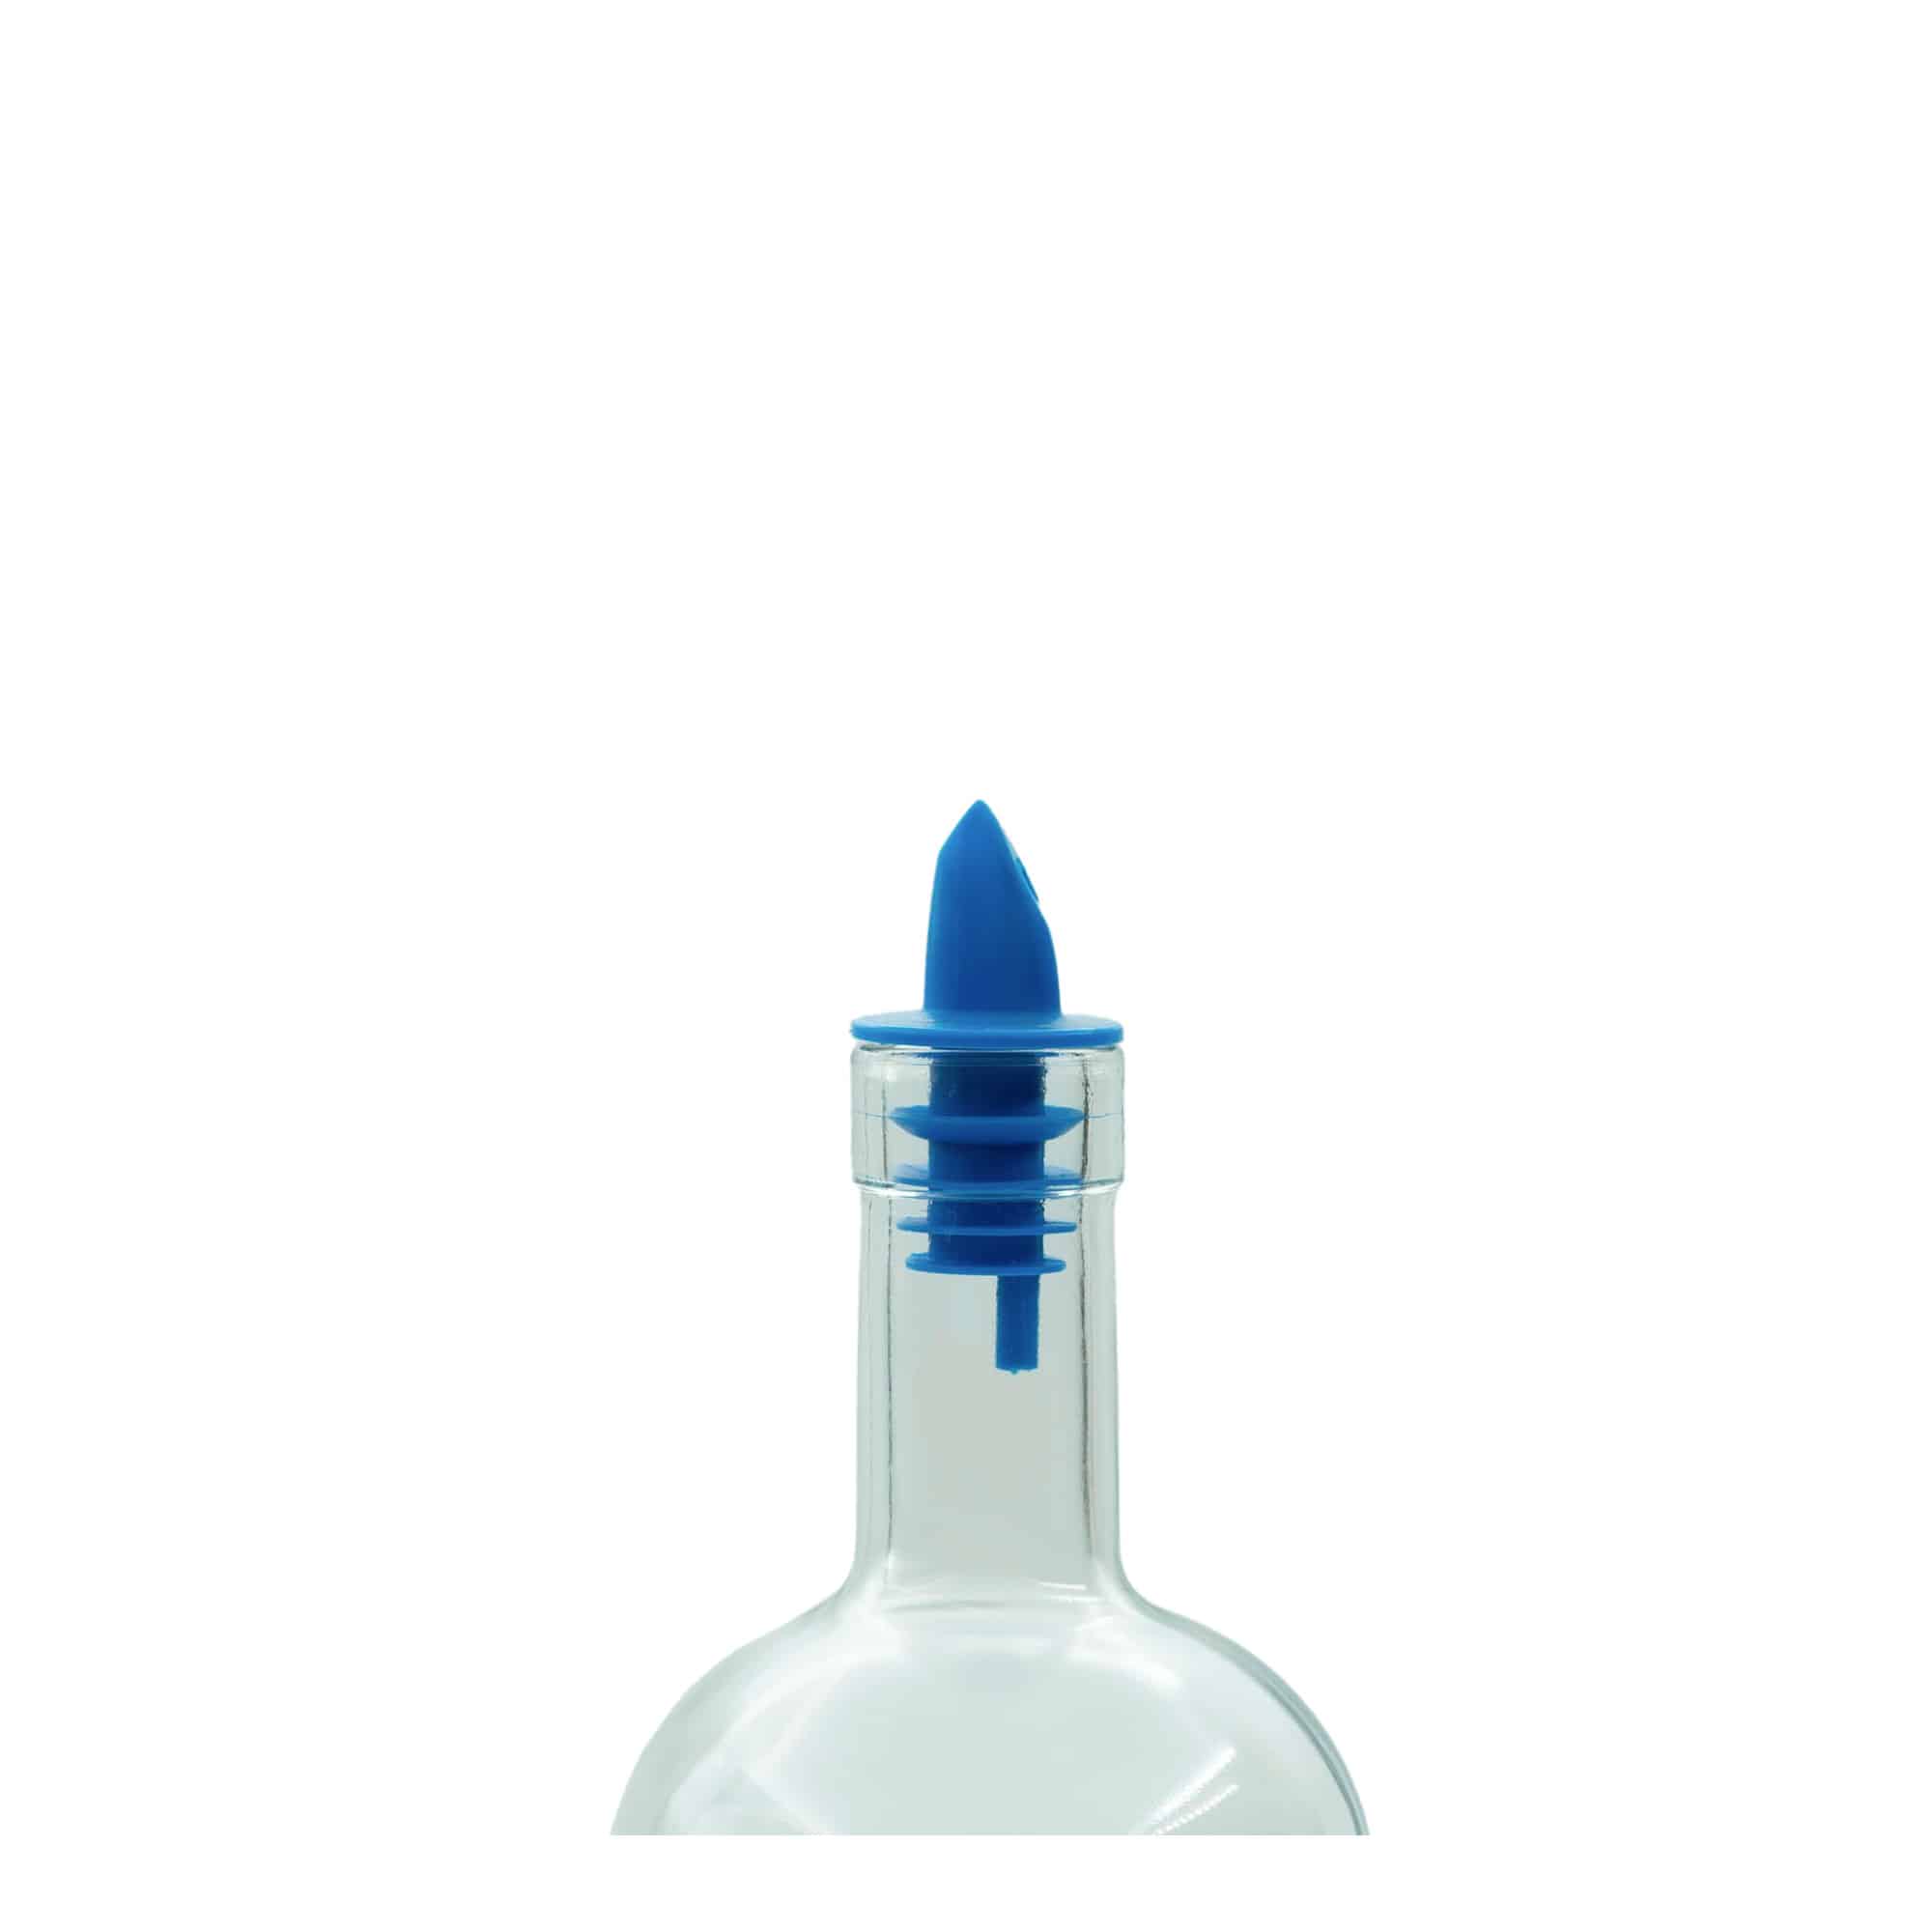 Vertedor Jet Pour, plástico de PE, azul